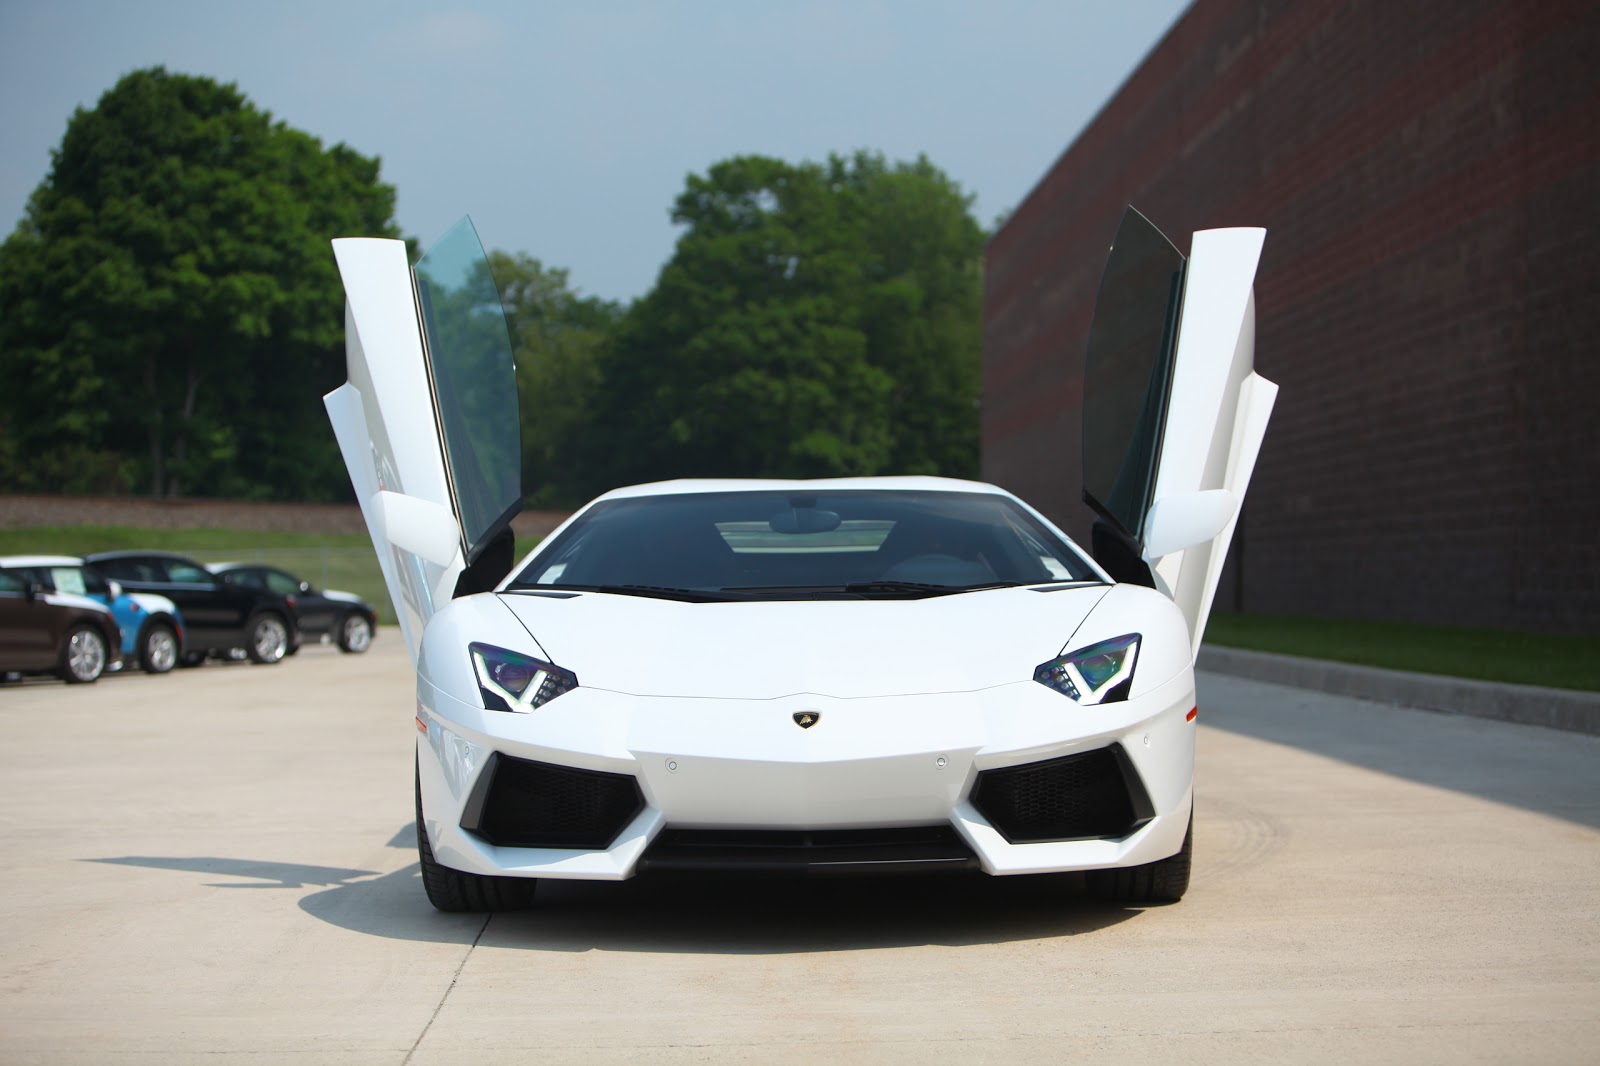 Photo of Lamborghini Paramus in Paramus City, New Jersey, United States - 2 Picture of Point of interest, Establishment, Car dealer, Store